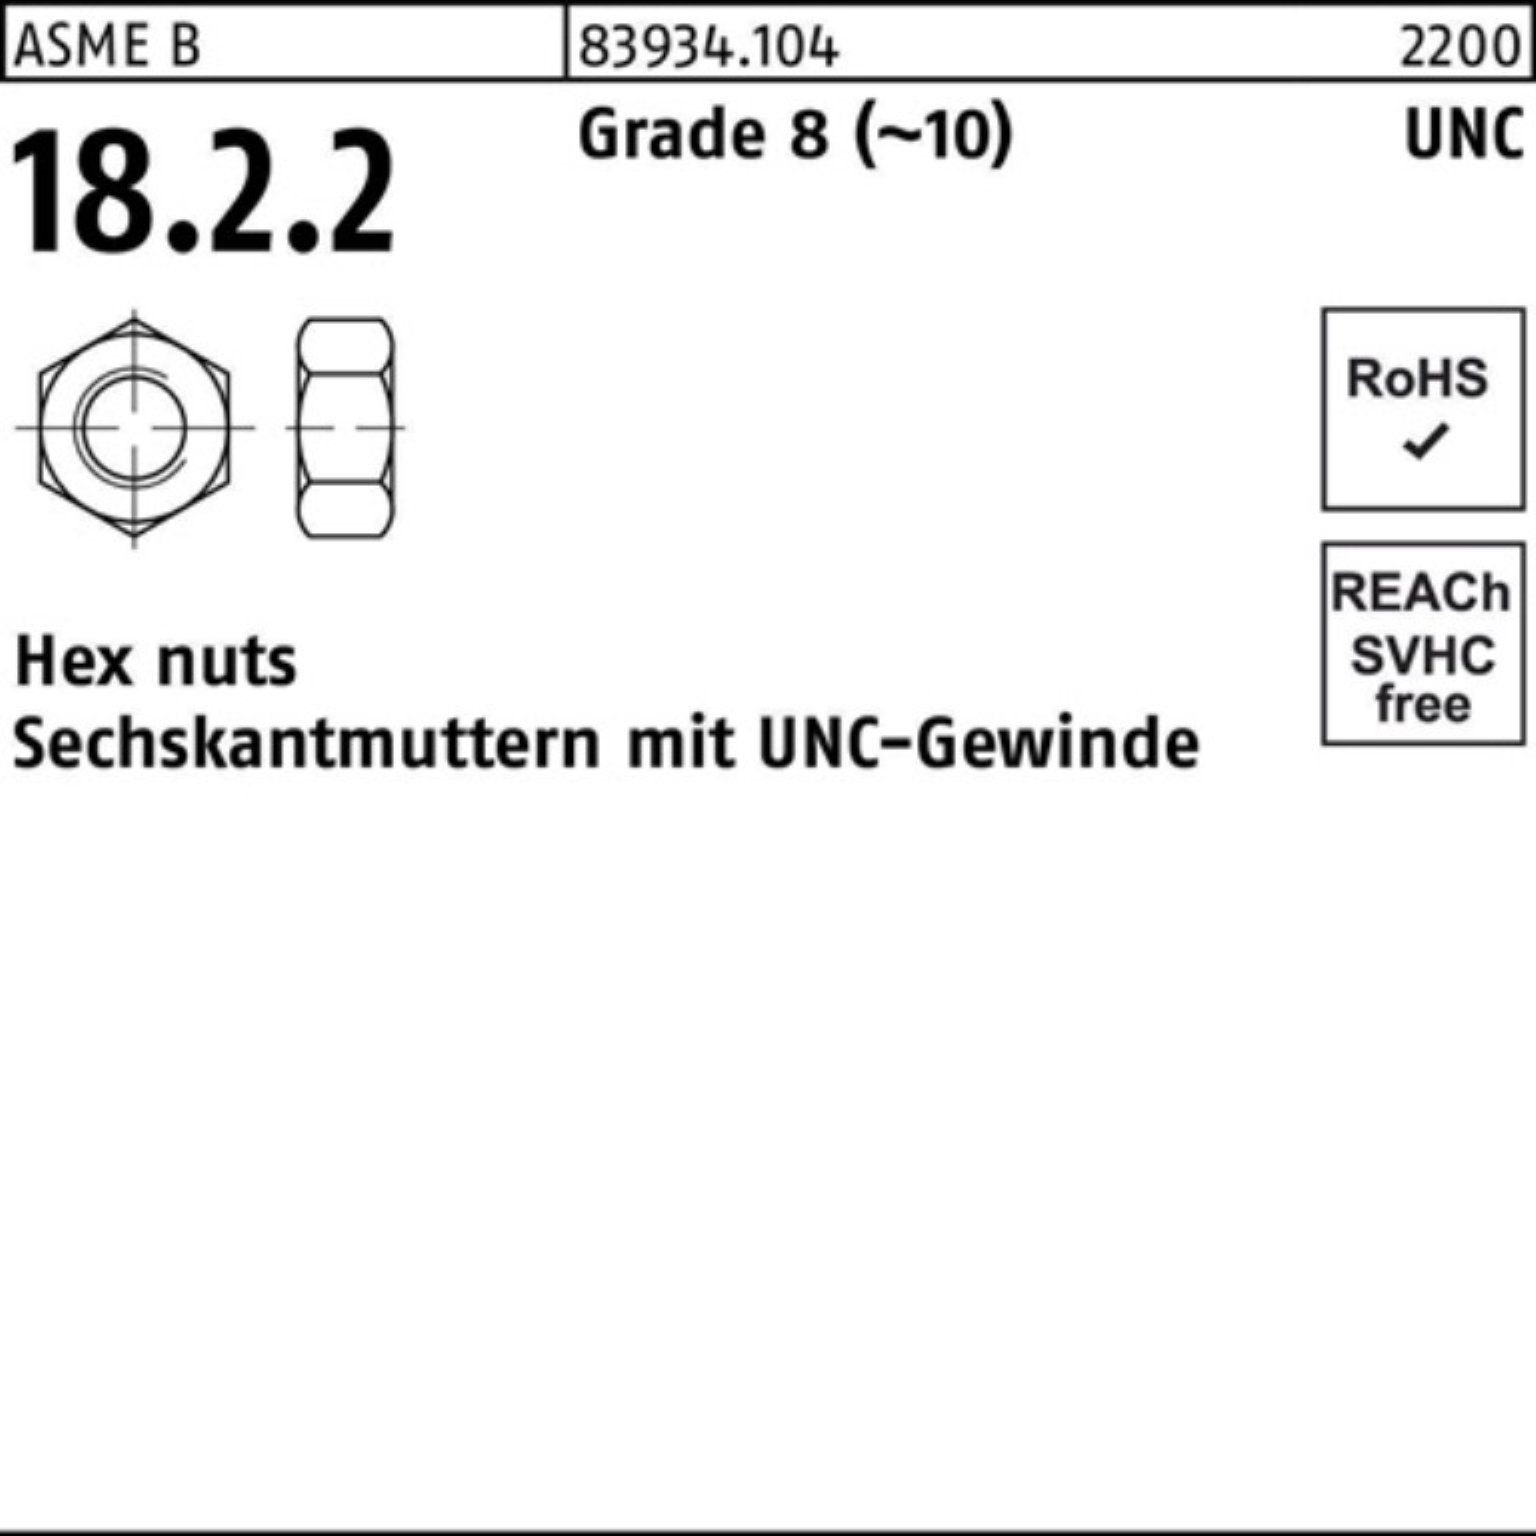 Pack R Muttern 8 1 1 (10) 83934 S Sechskantmutter 3/4 Grade Reyher UNC-Gewinde 100er